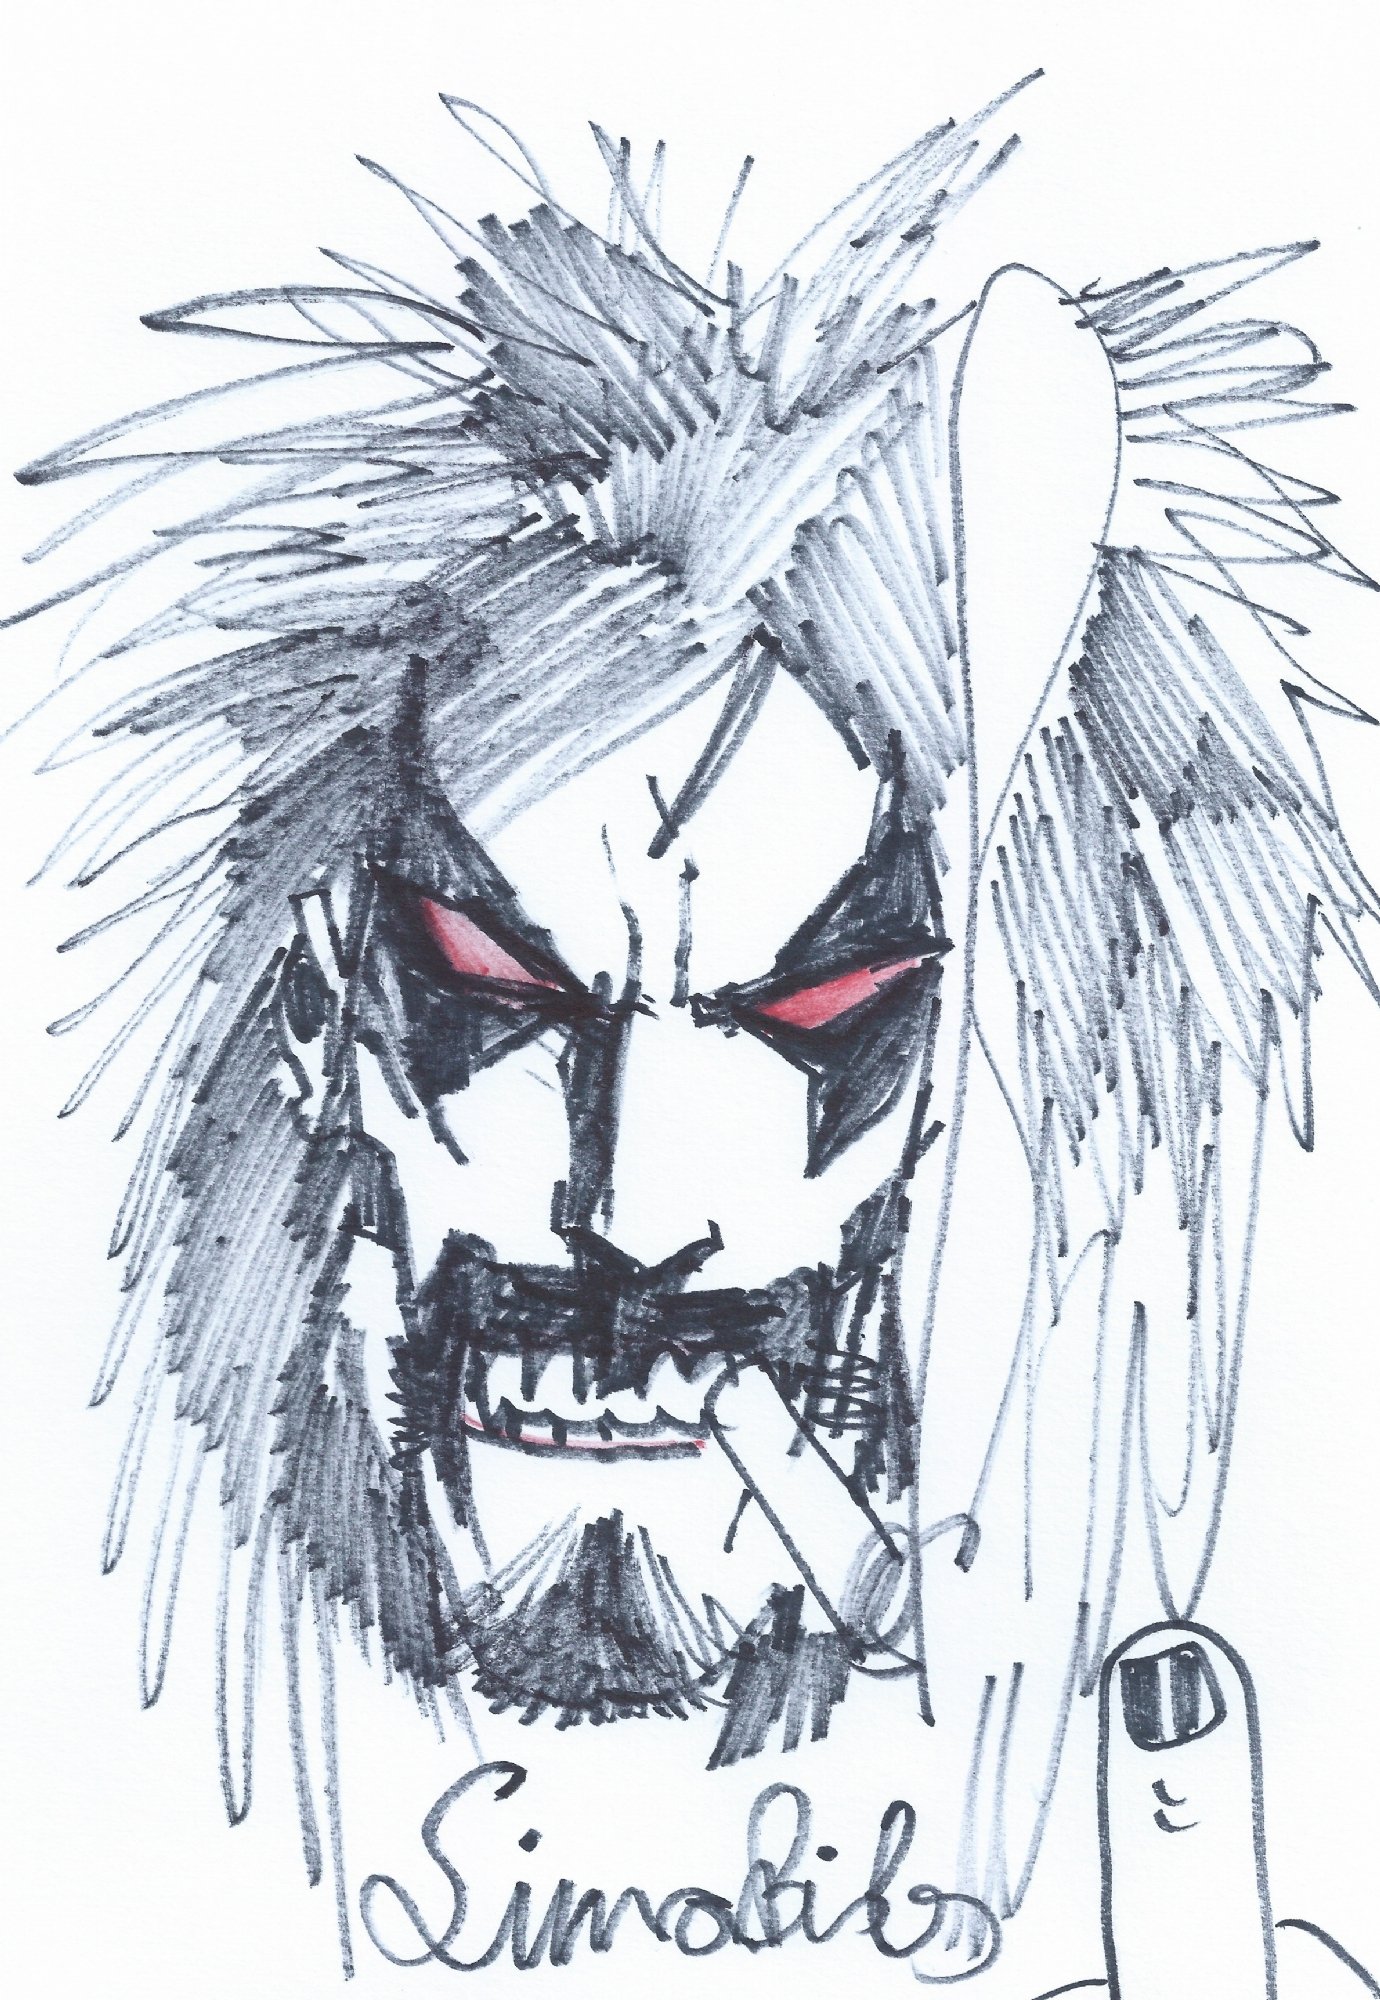 Lobo by Simon Bisley, in Killian C's The Batman, Nightwing & other DC  Comics pieces Comic Art Gallery Room